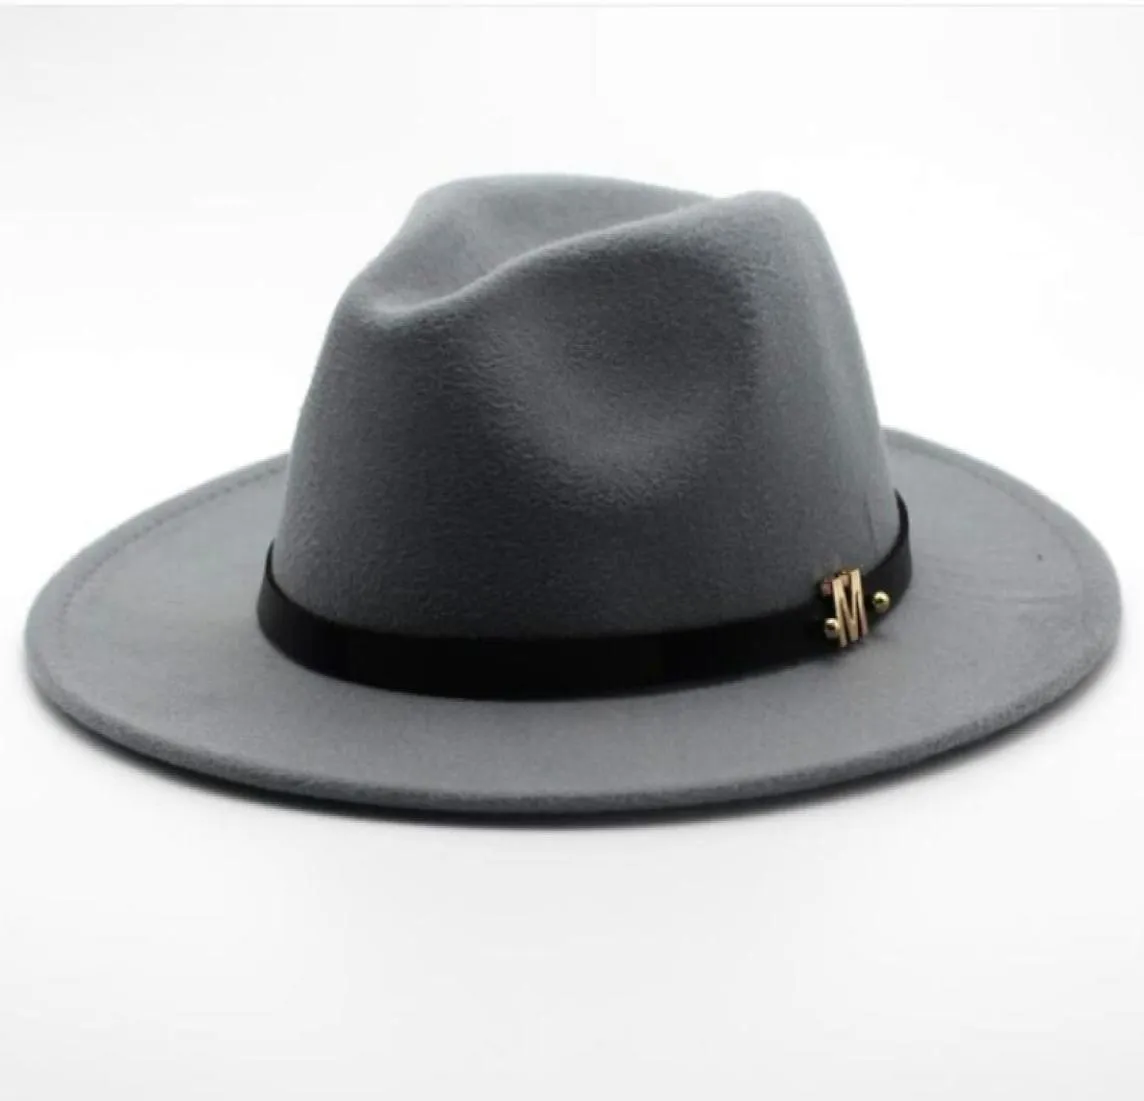 Seioum New Brand Wool Men039s Black Fedora Hat For Gentleman Woolen Wide Brim Jazz Church Cap Vintage Panama Sun Top Hat D190114683724